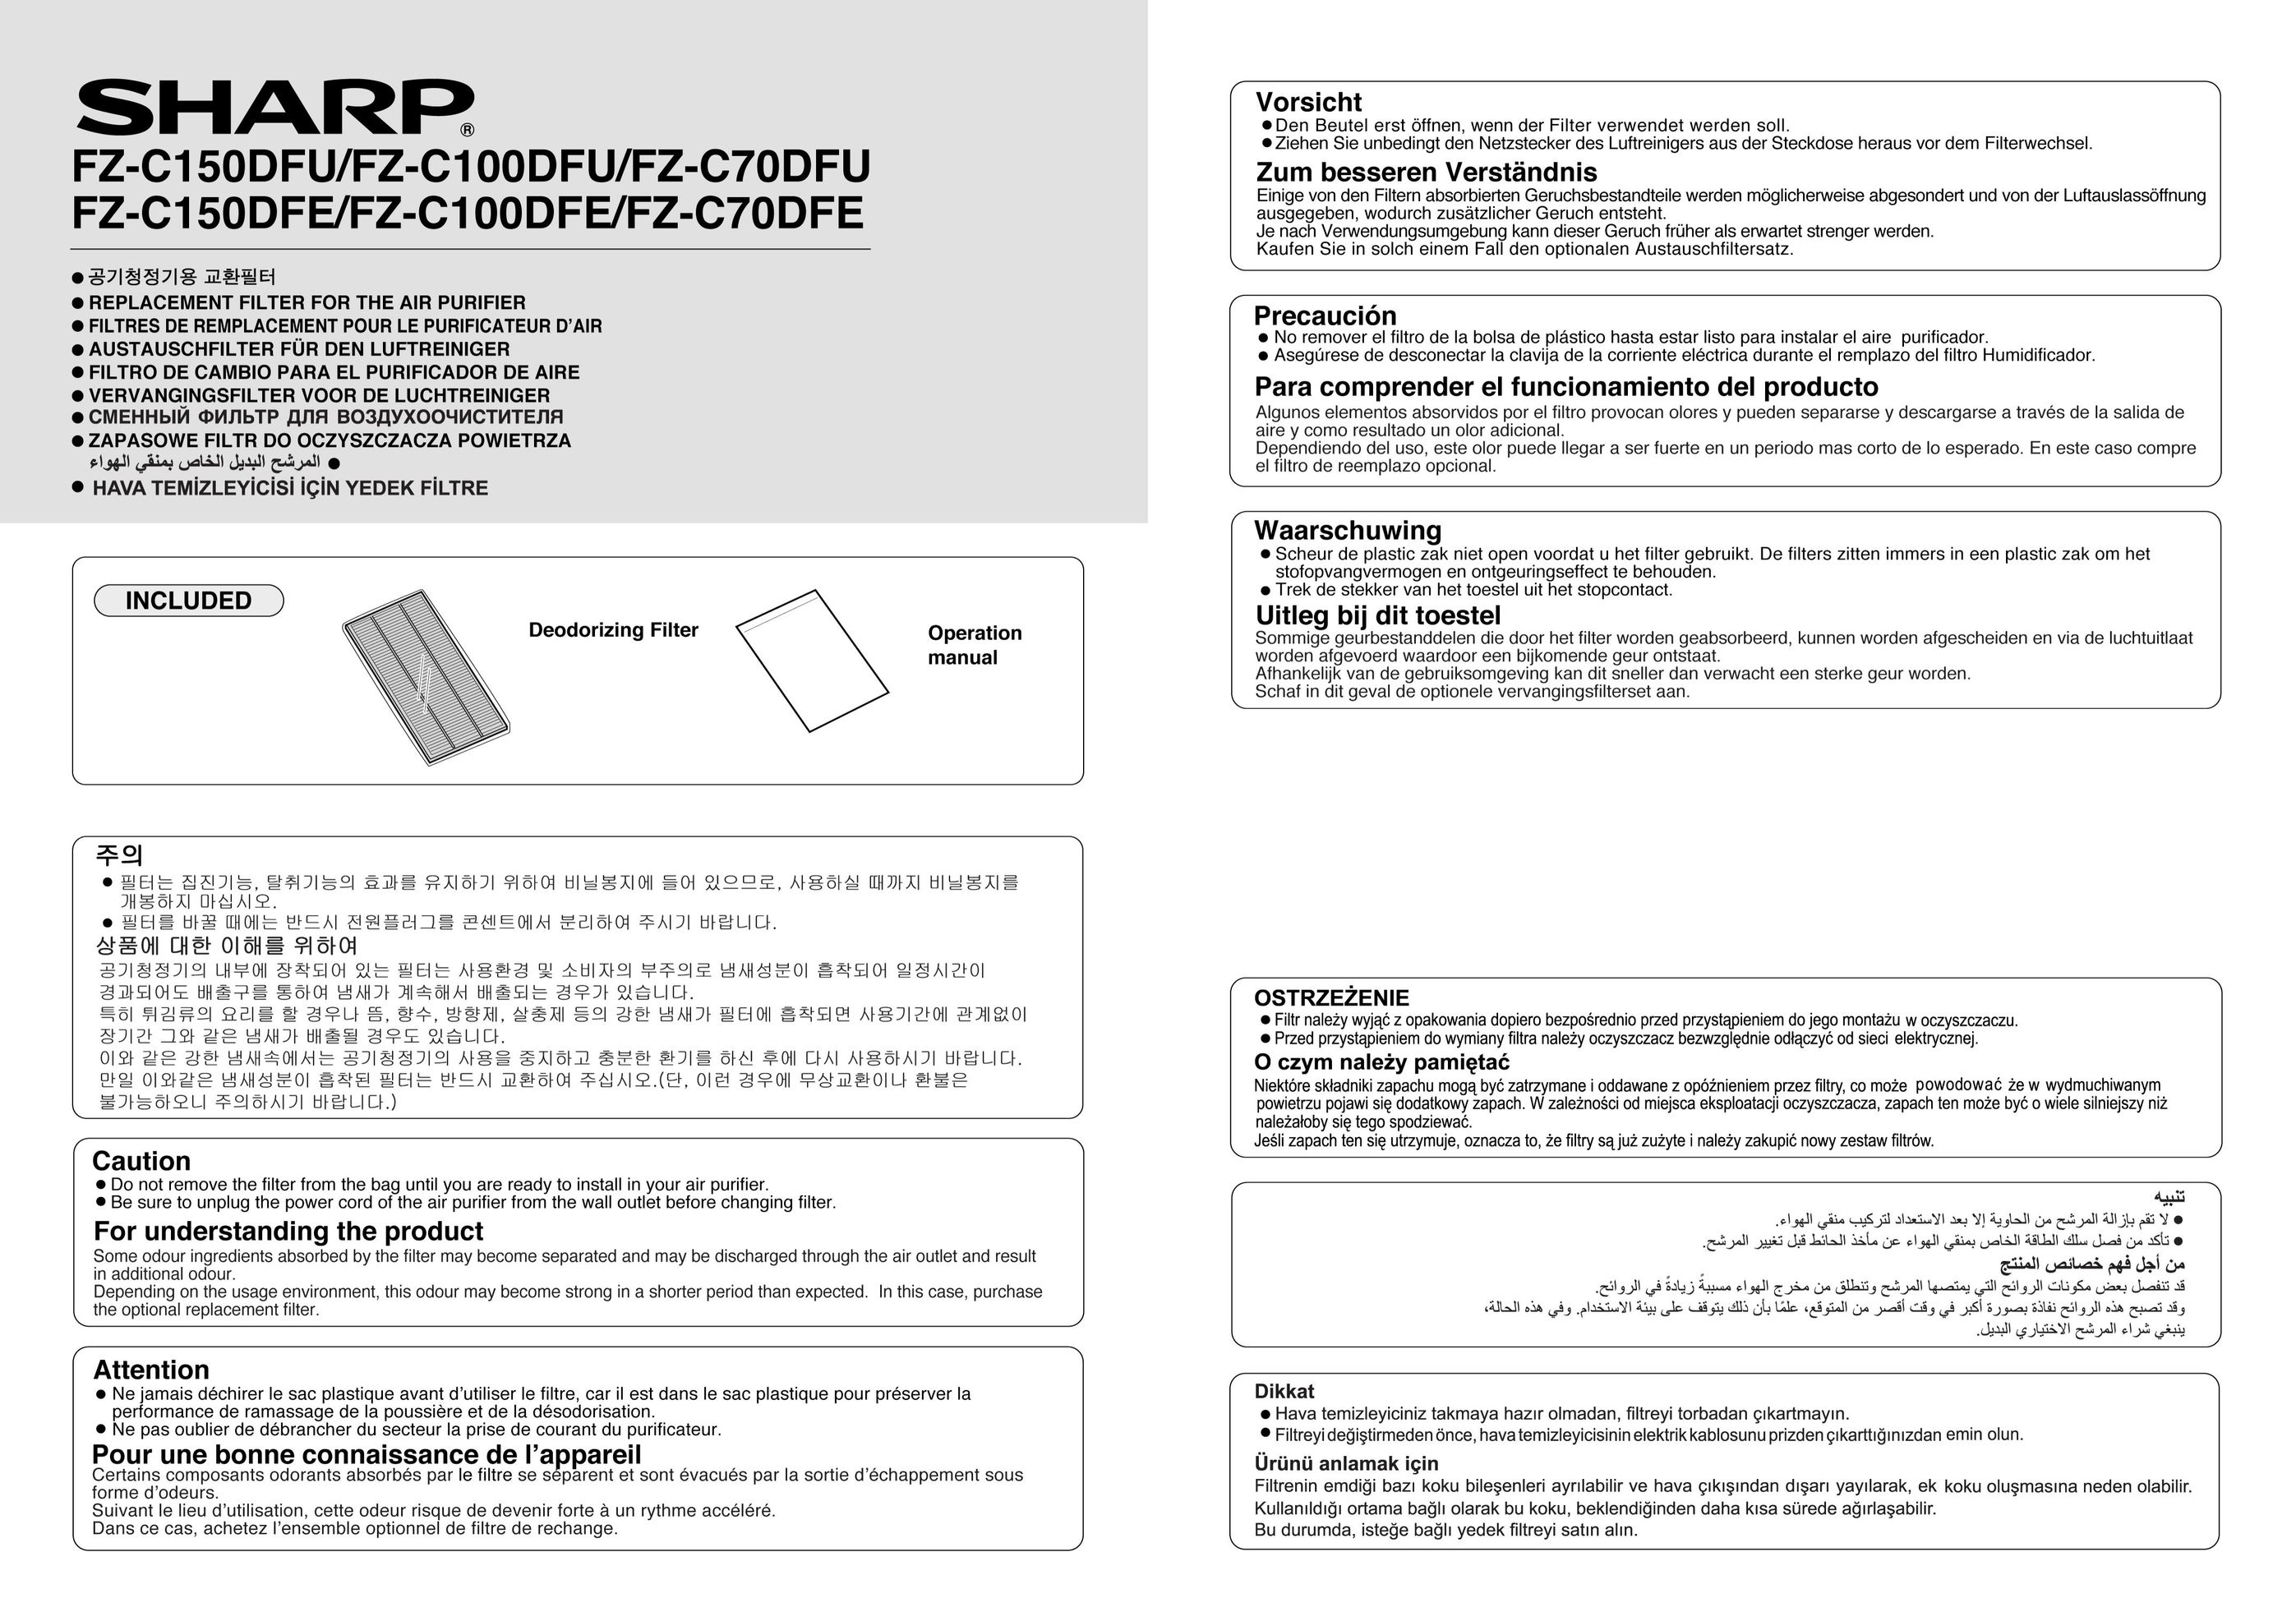 Sharp FZ-C150DFU Air Cleaner User Manual